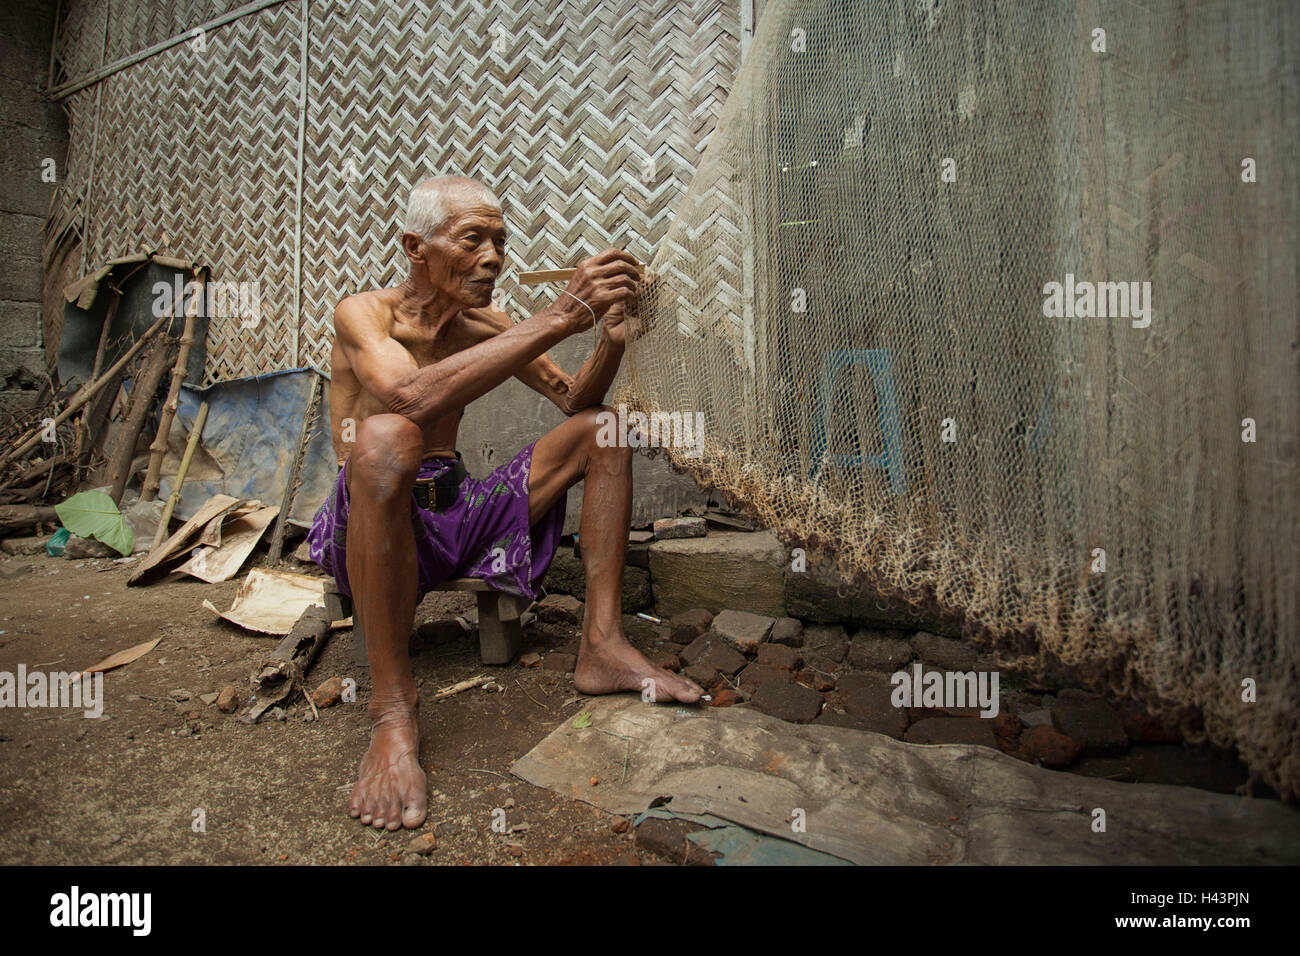 Senior man repairing a fishing net, Jember, East Java, Indonesia Stock Photo